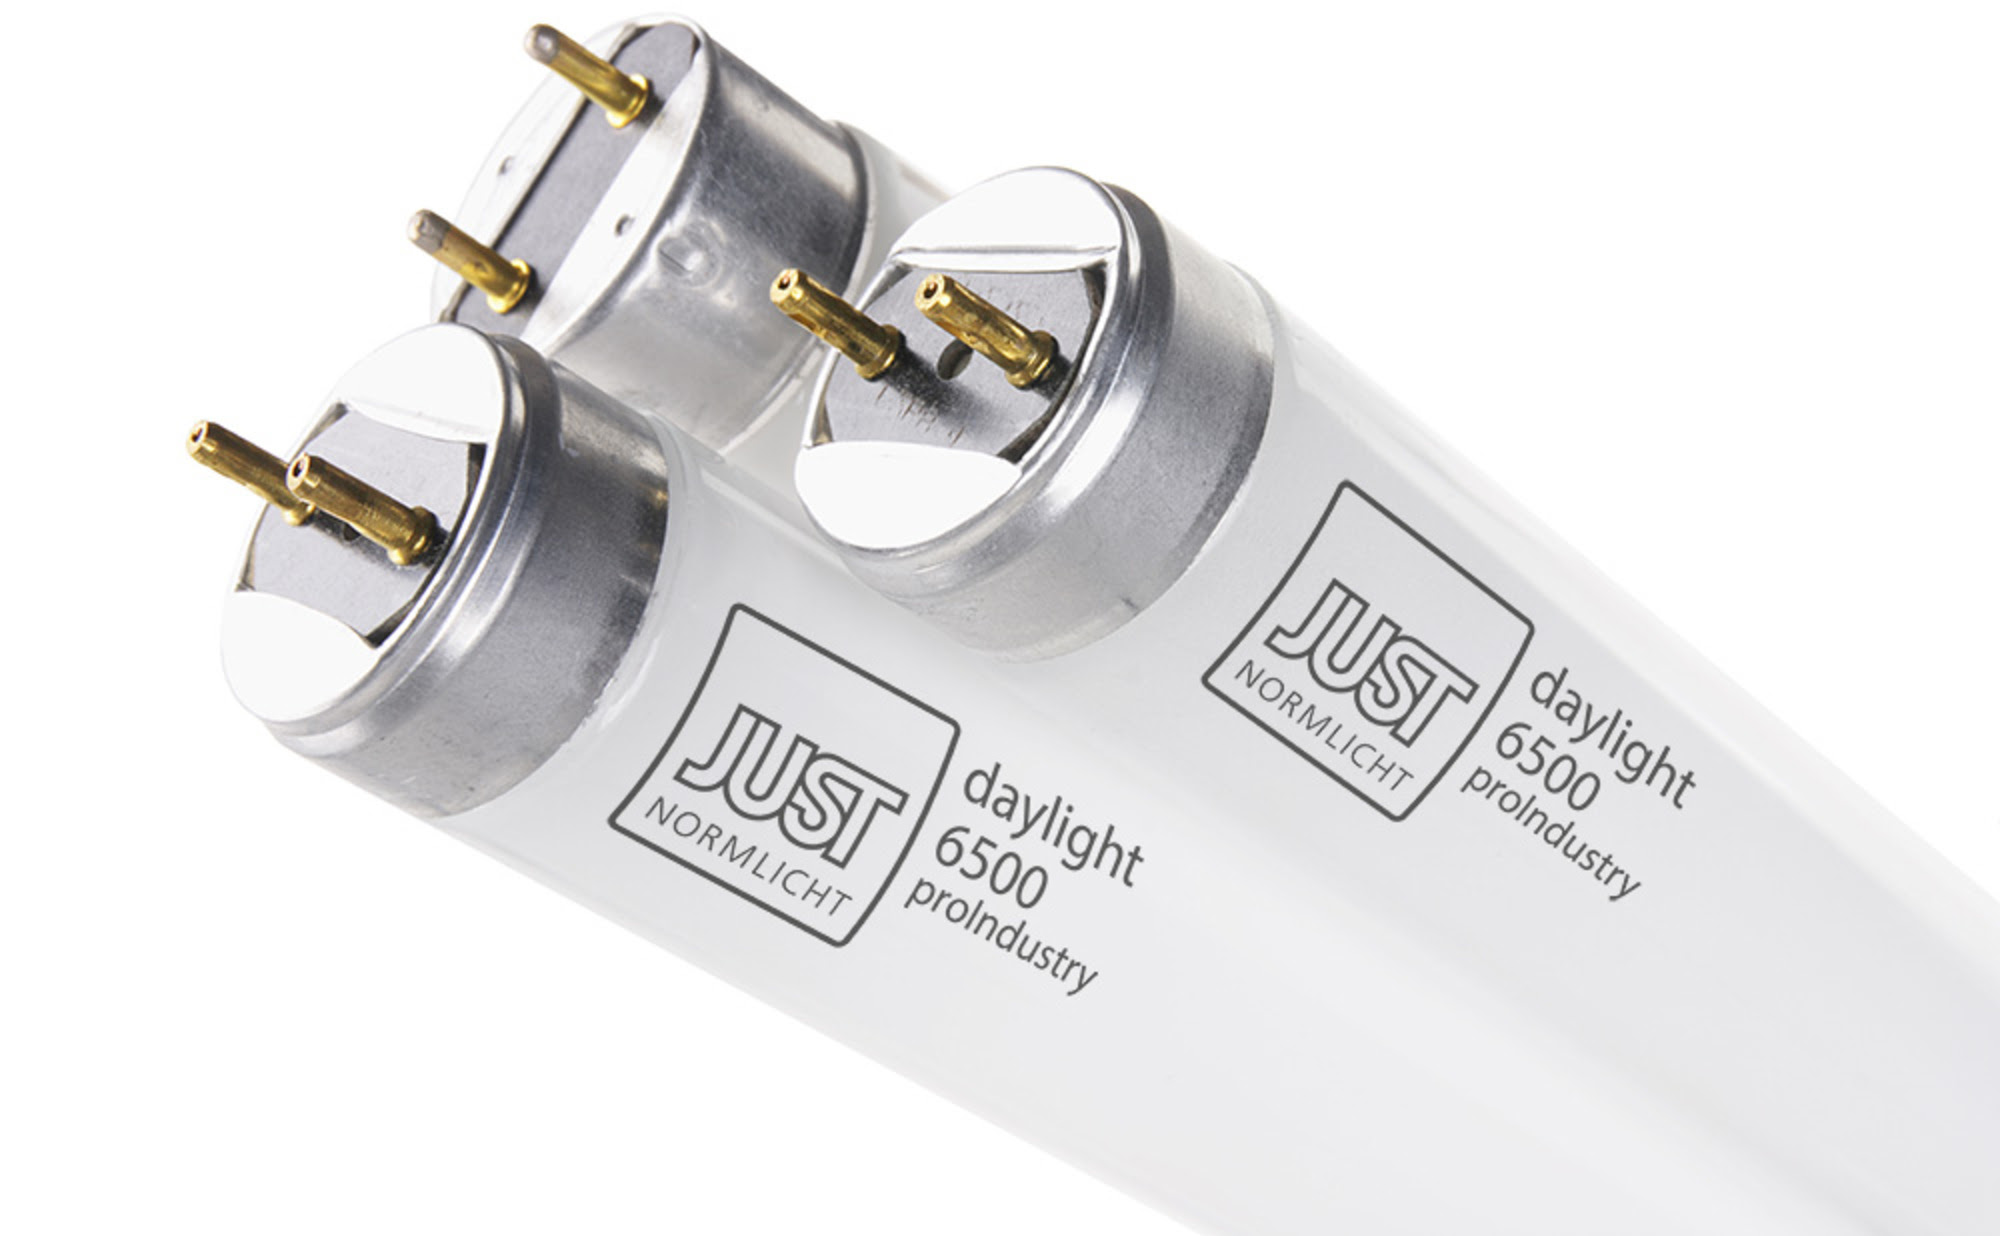 JUST daylight 6500 proIndustry | 18 Watt